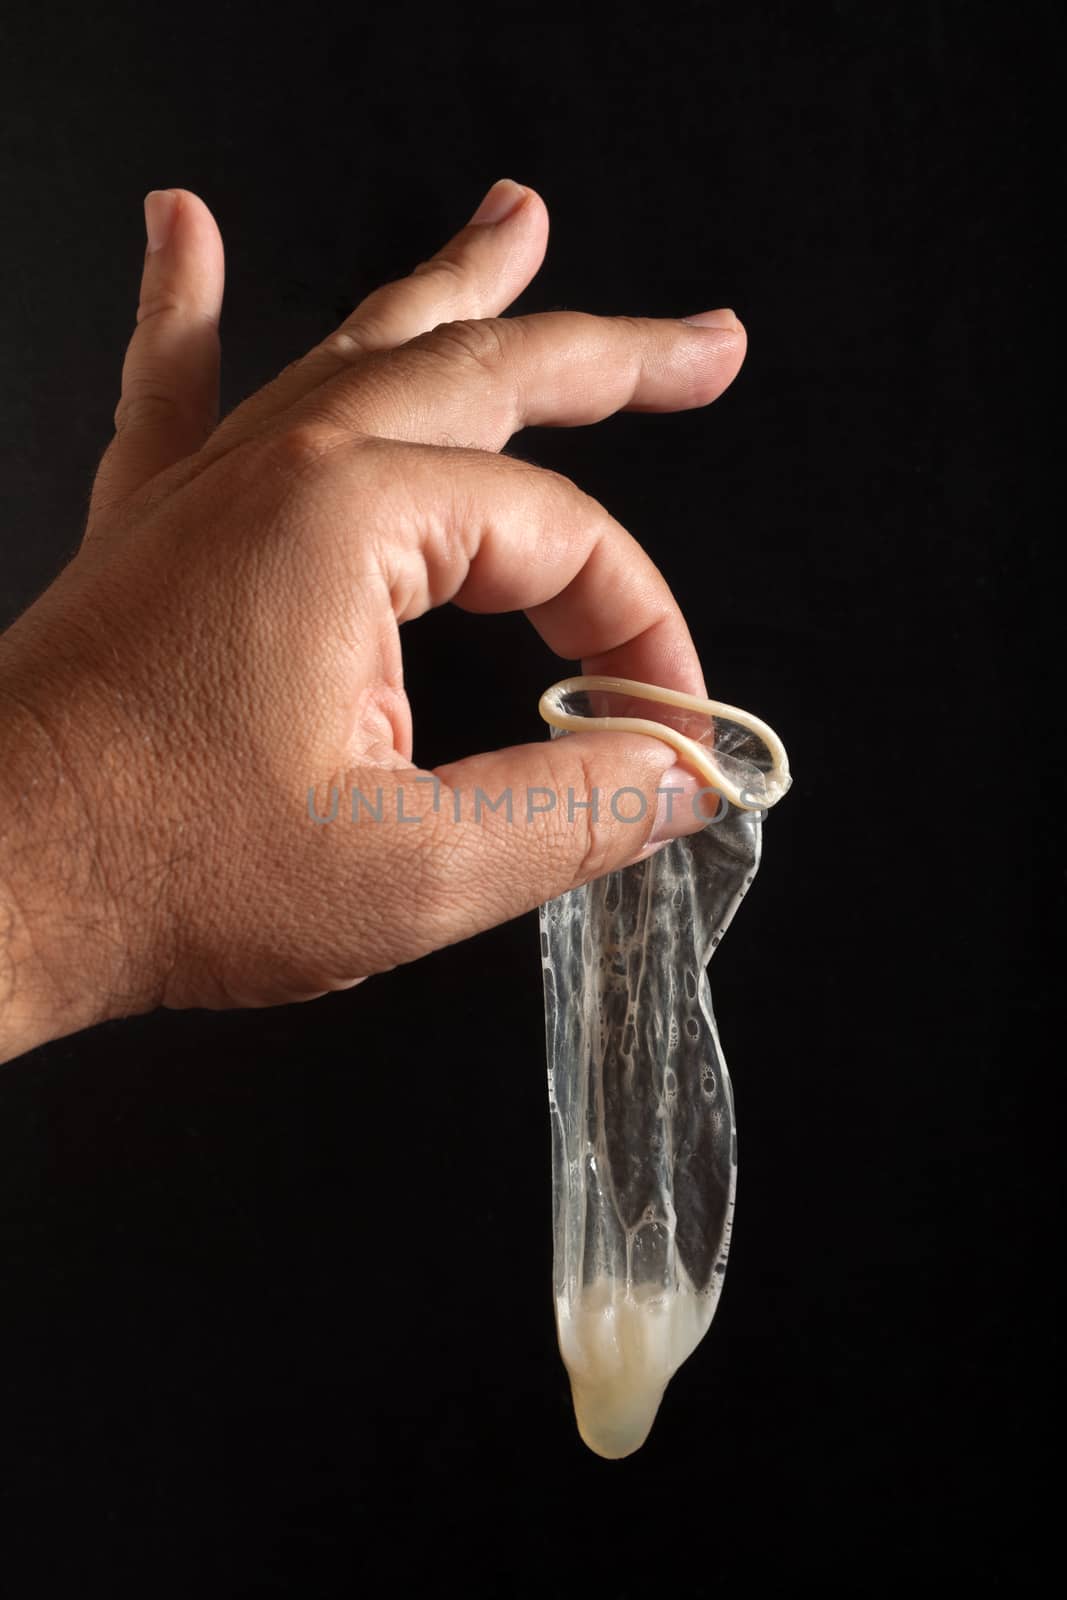 Used condom with sperm by Portokalis